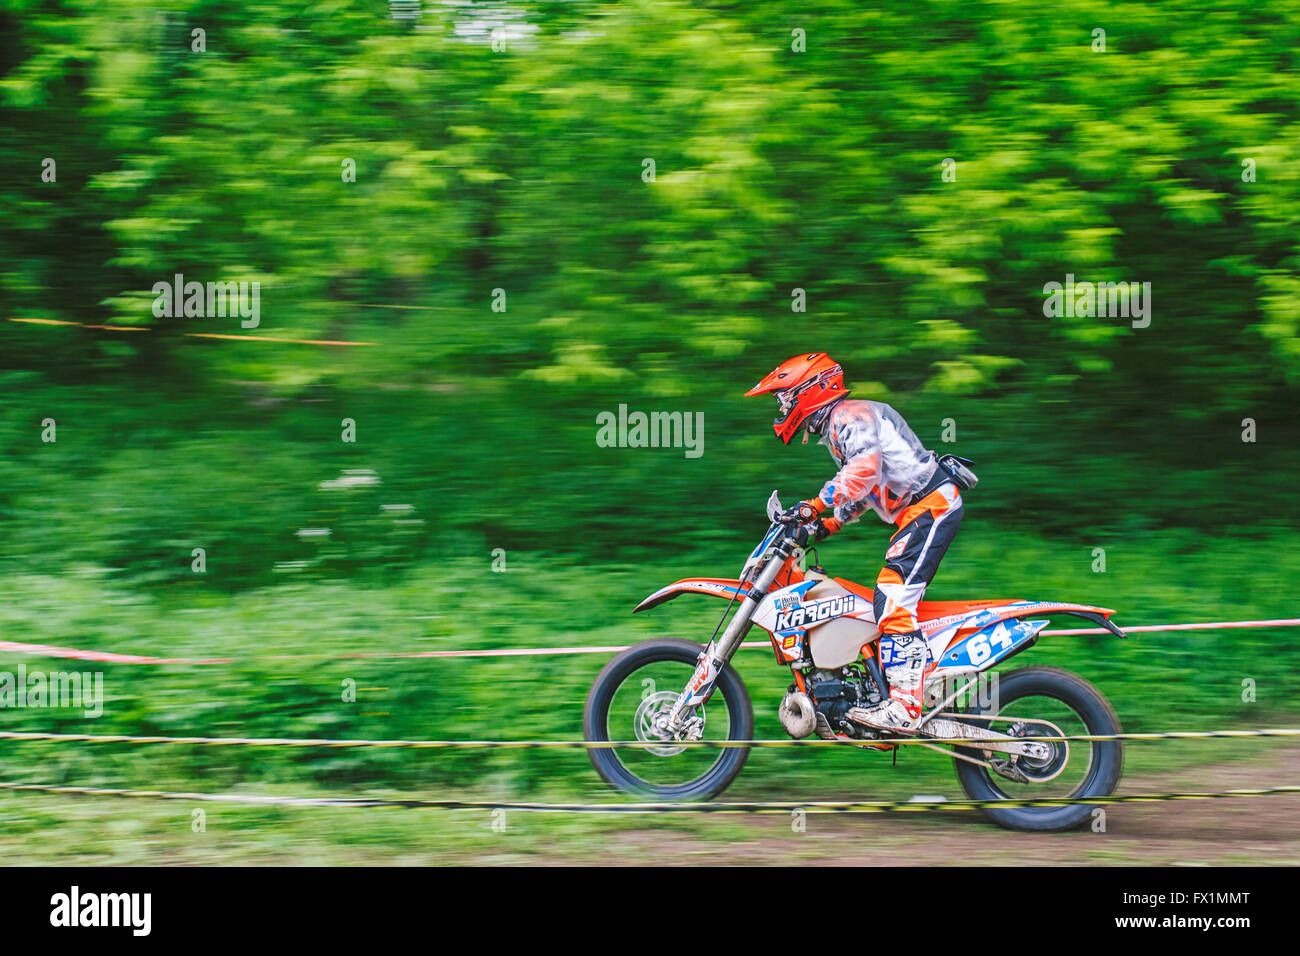 Motocycliste Enduro motocross rider Banque D'Images